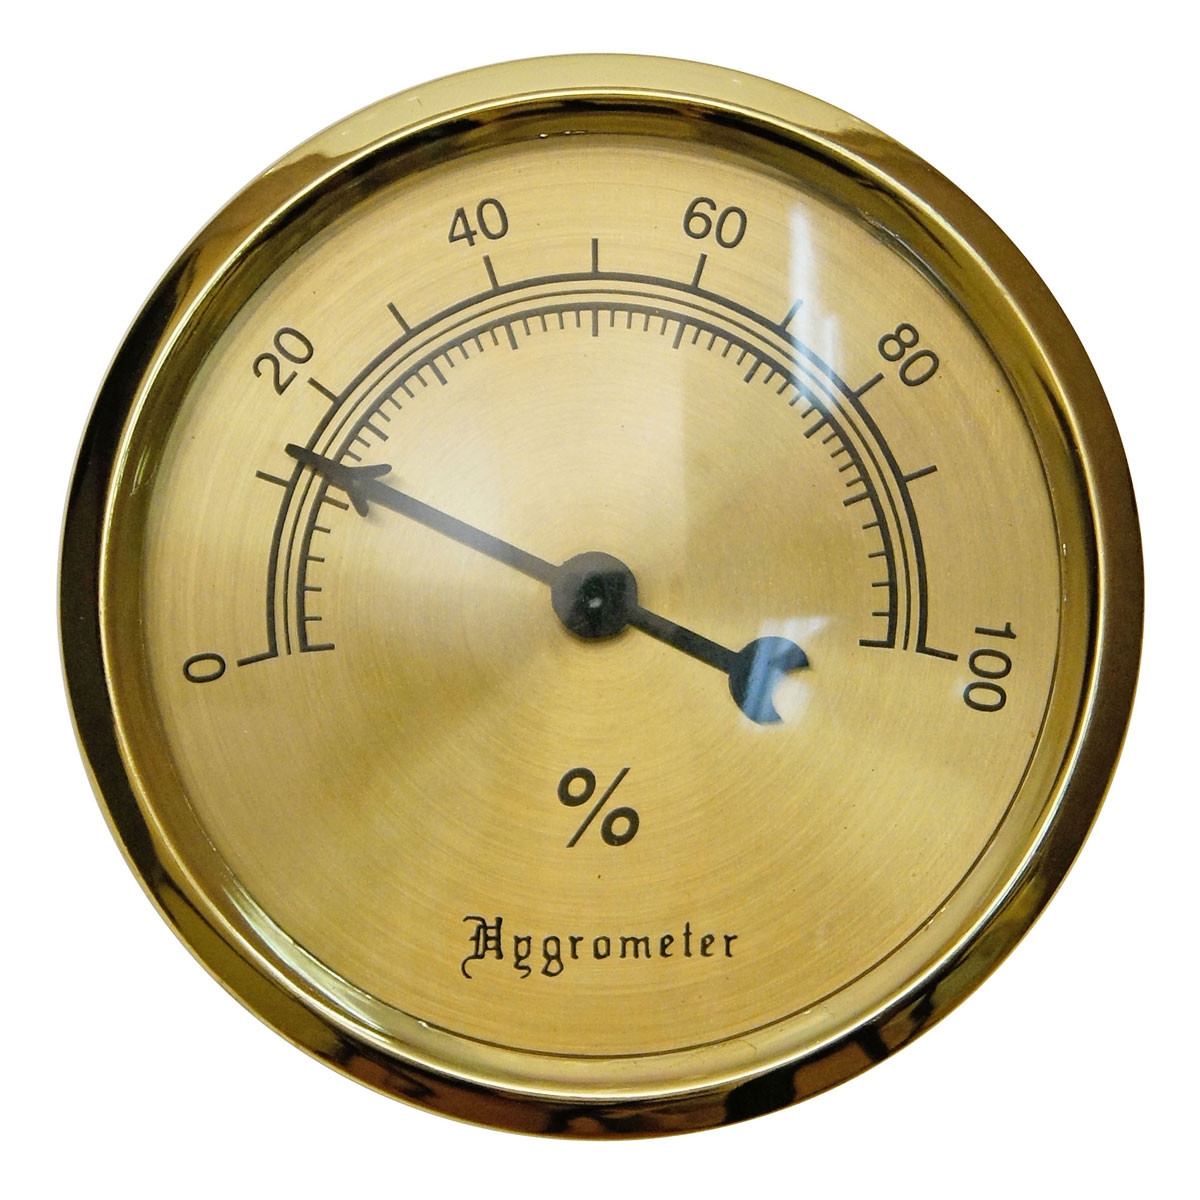 [DIAGRAM] Diagram Of Hygrometer - MYDIAGRAM.ONLINE